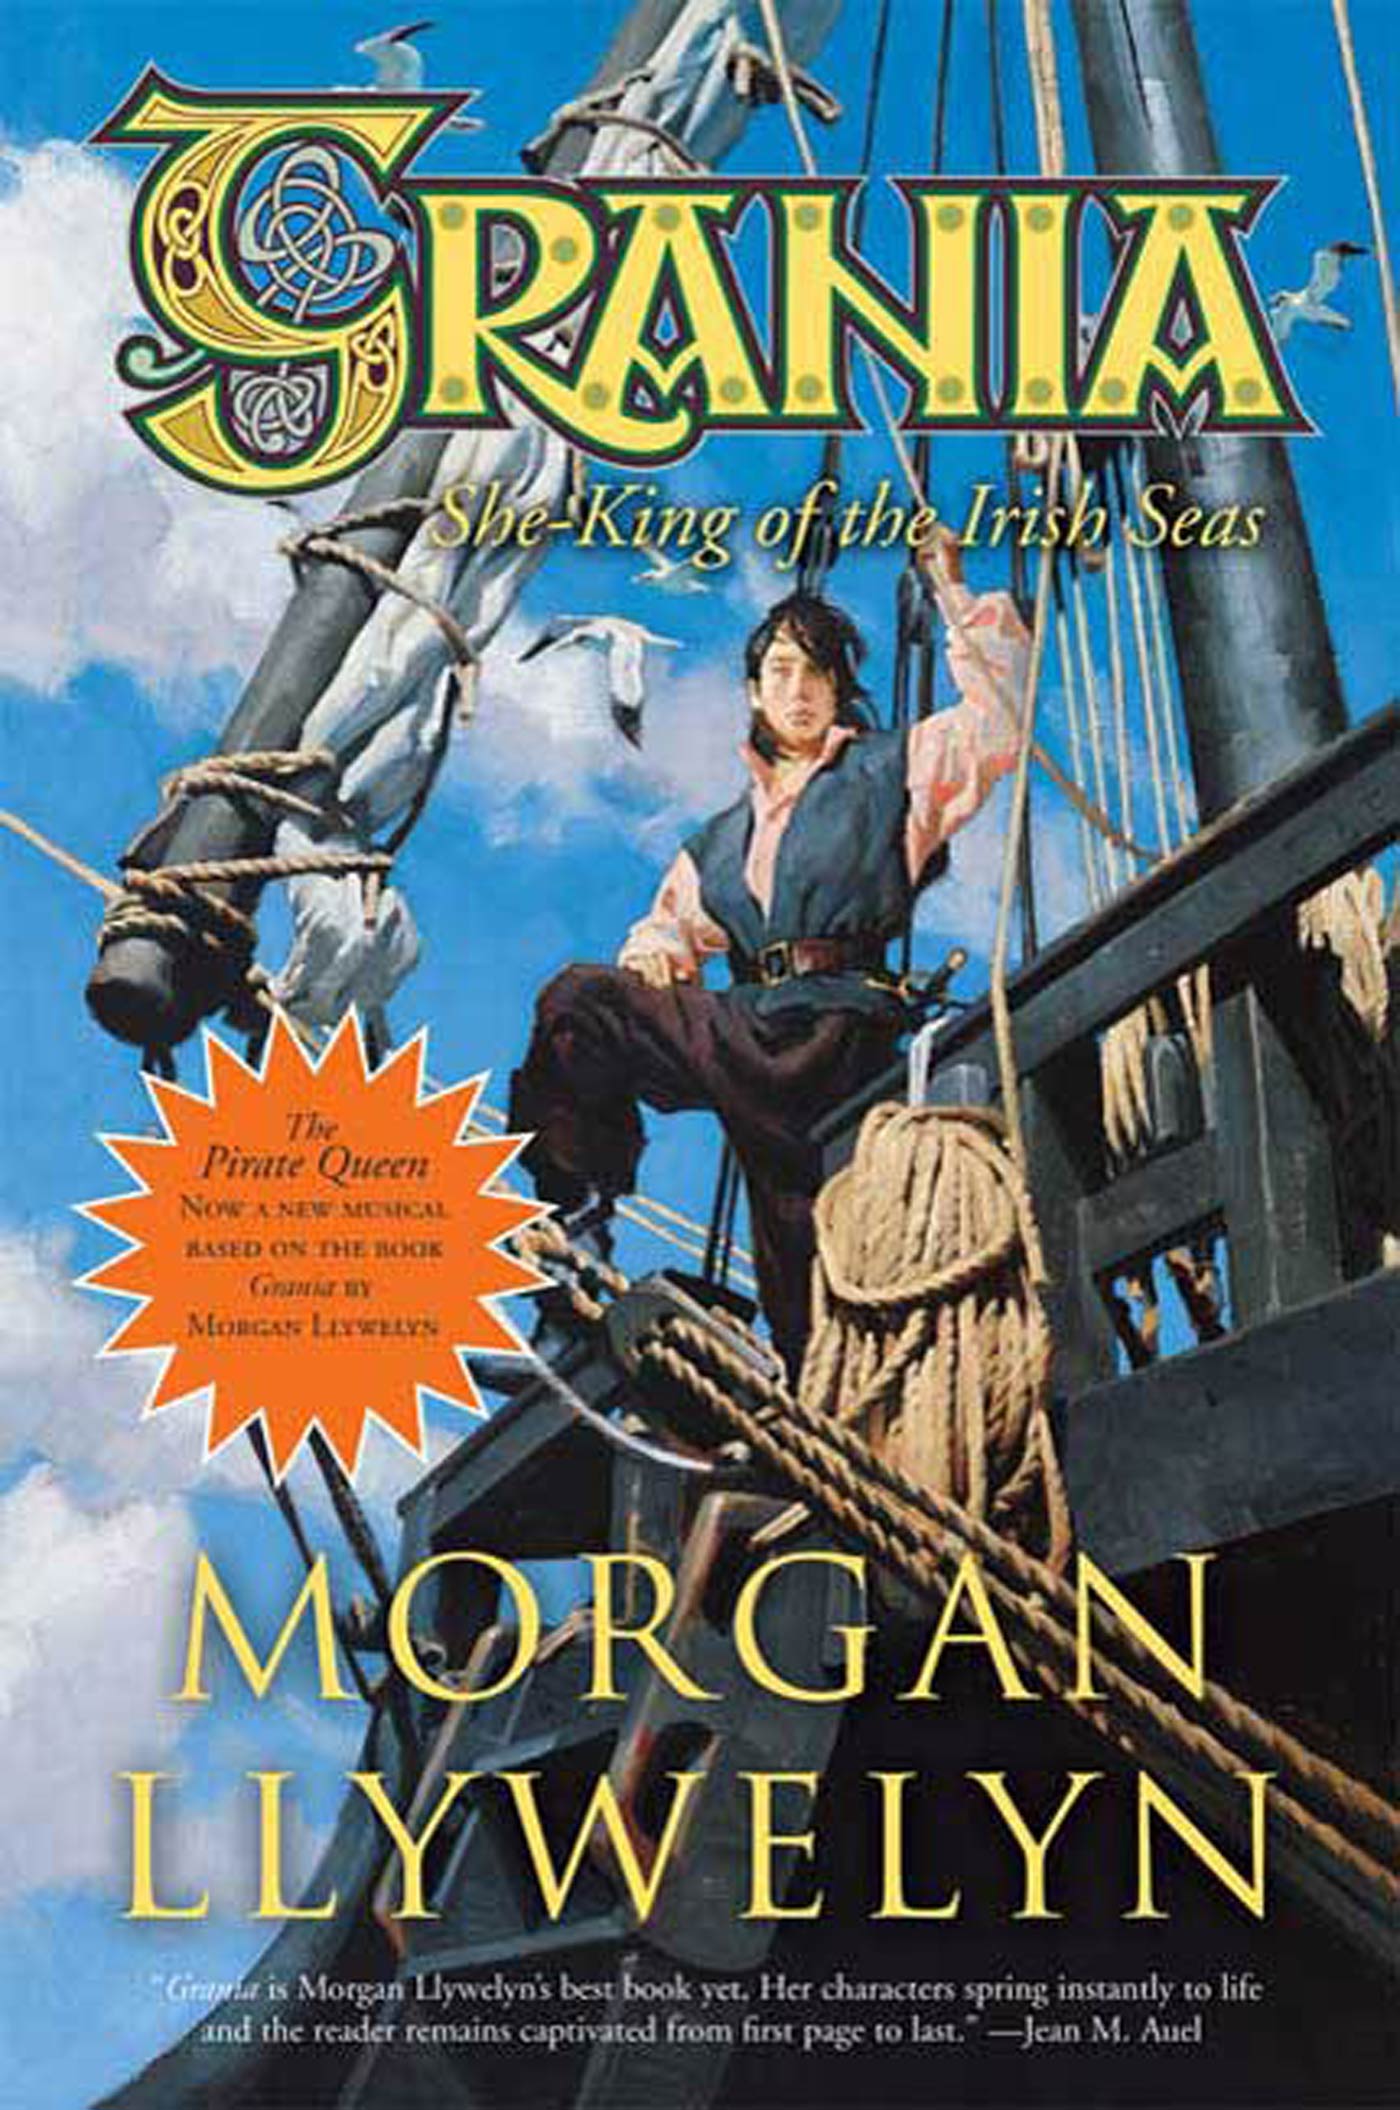 Grania : She-King of the Irish Seas by Morgan Llywelyn